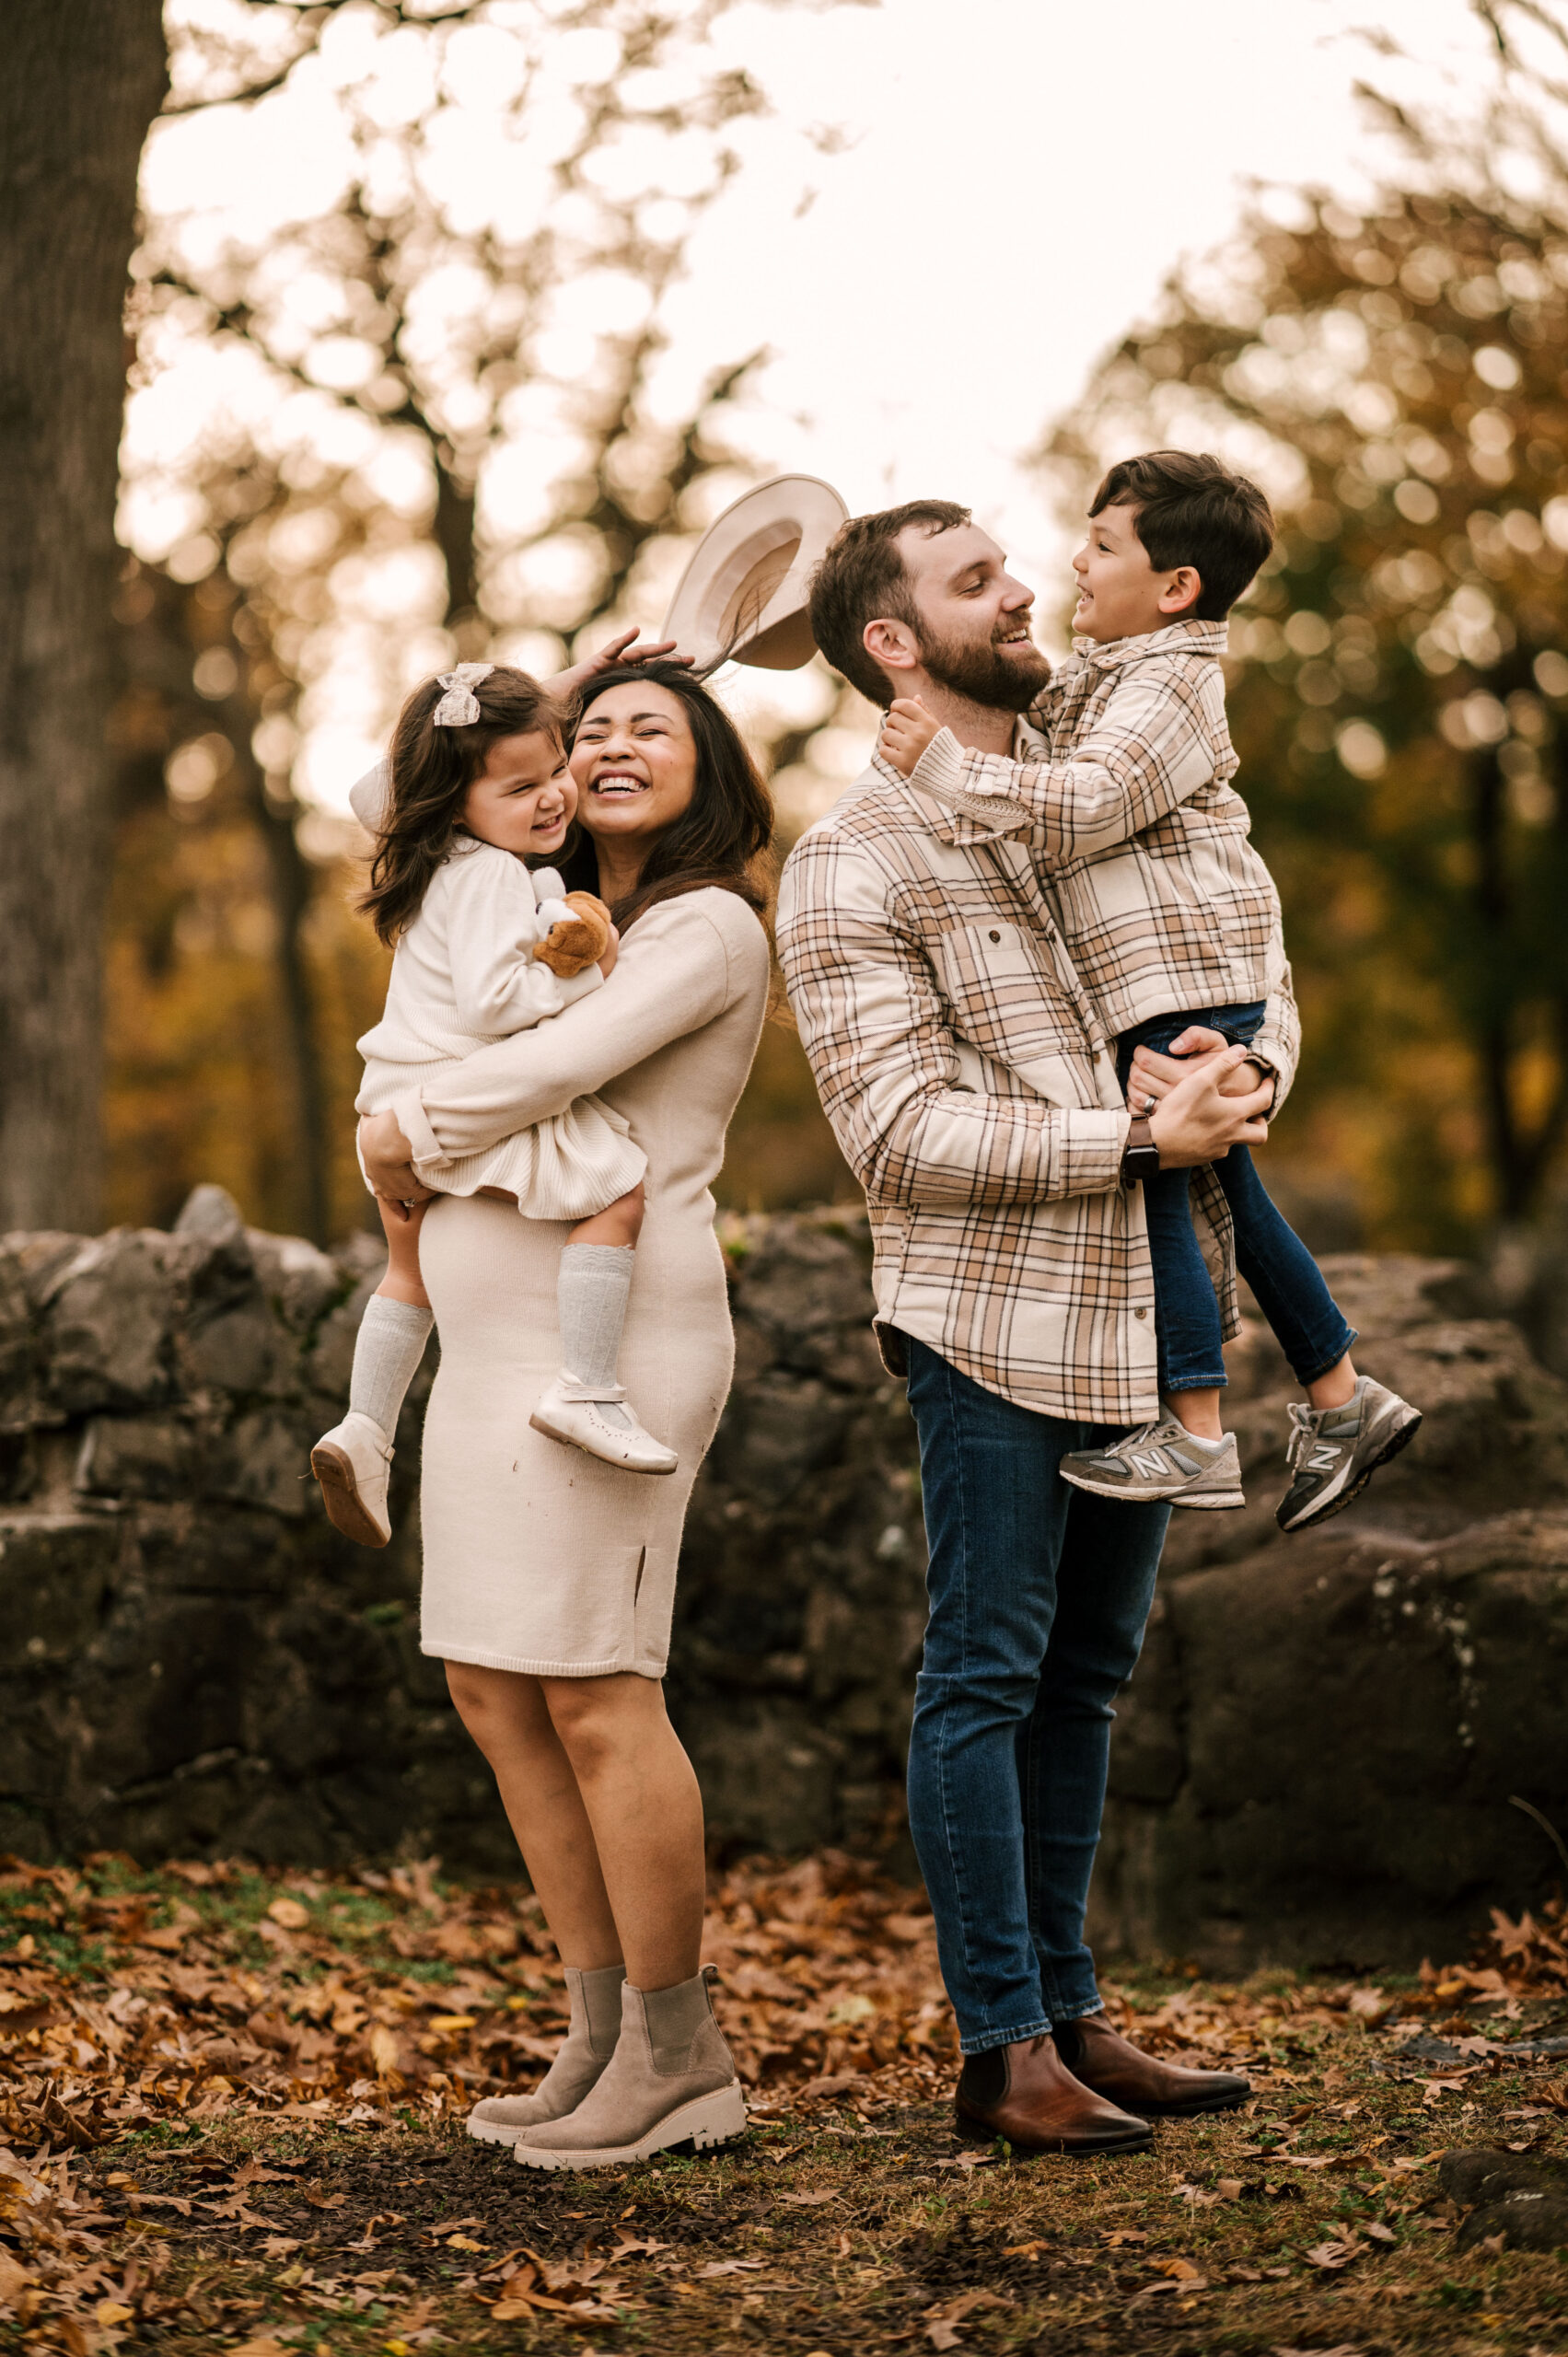 family laughing and having fun at kip's castle park family photo shoot in the November Fall season